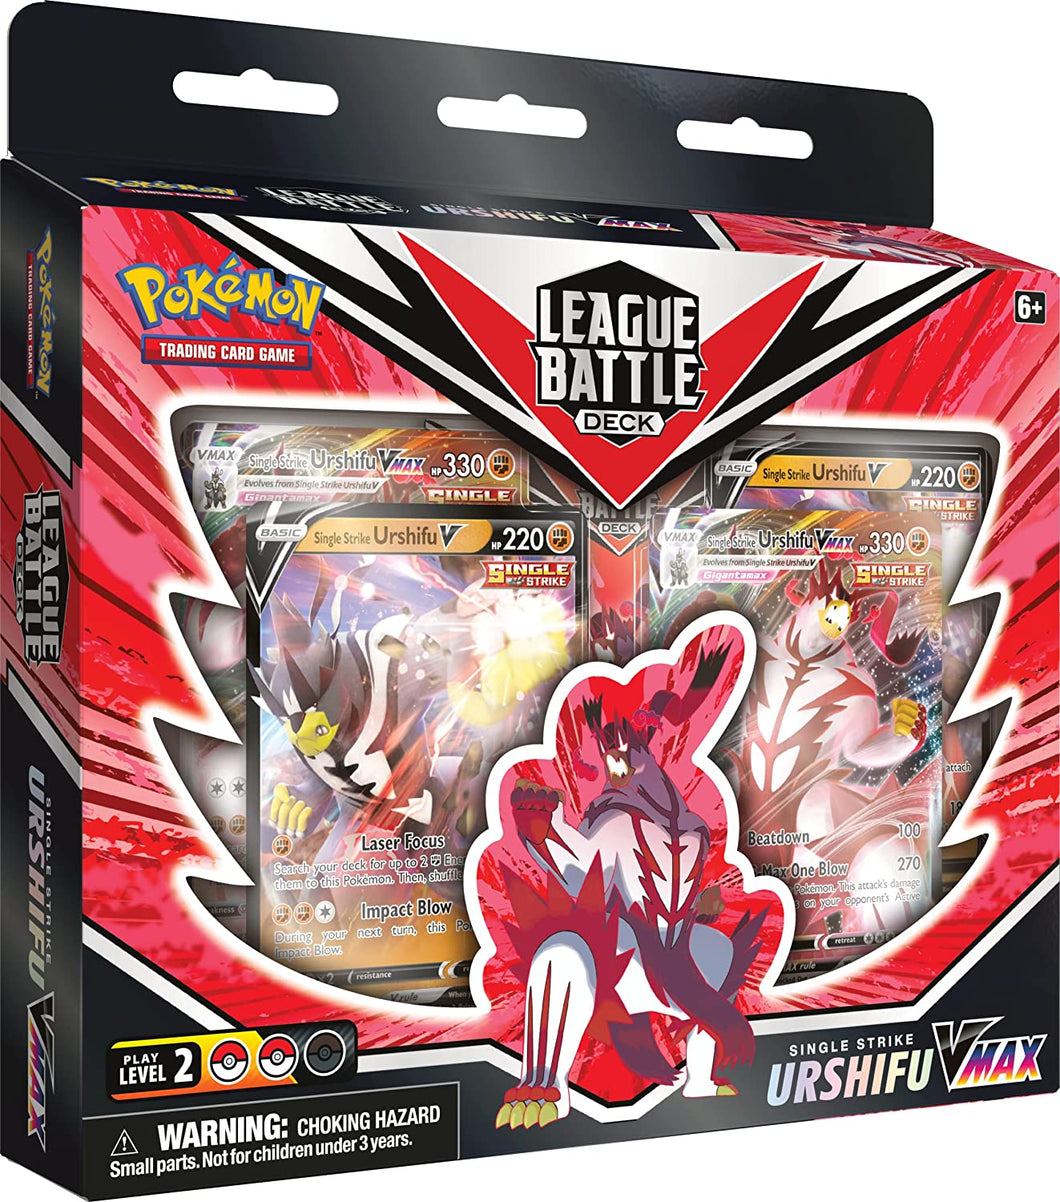 Pokémon: VMAX League Battle Deck (Single or Rapid Strike Urshifu)